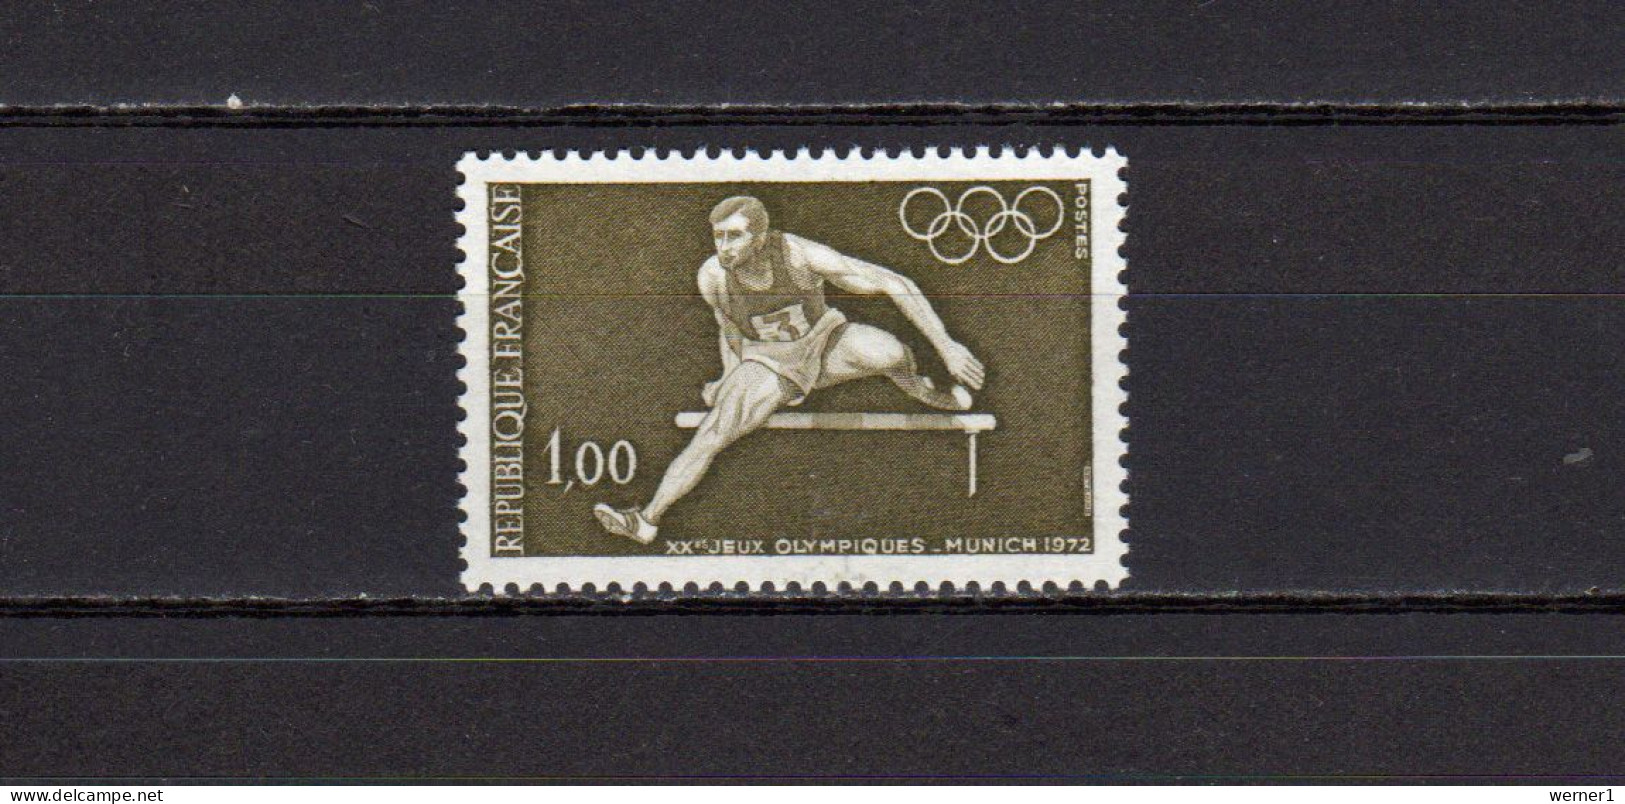 France 1972 Olympic Games Munich Stamp MNH - Ete 1972: Munich